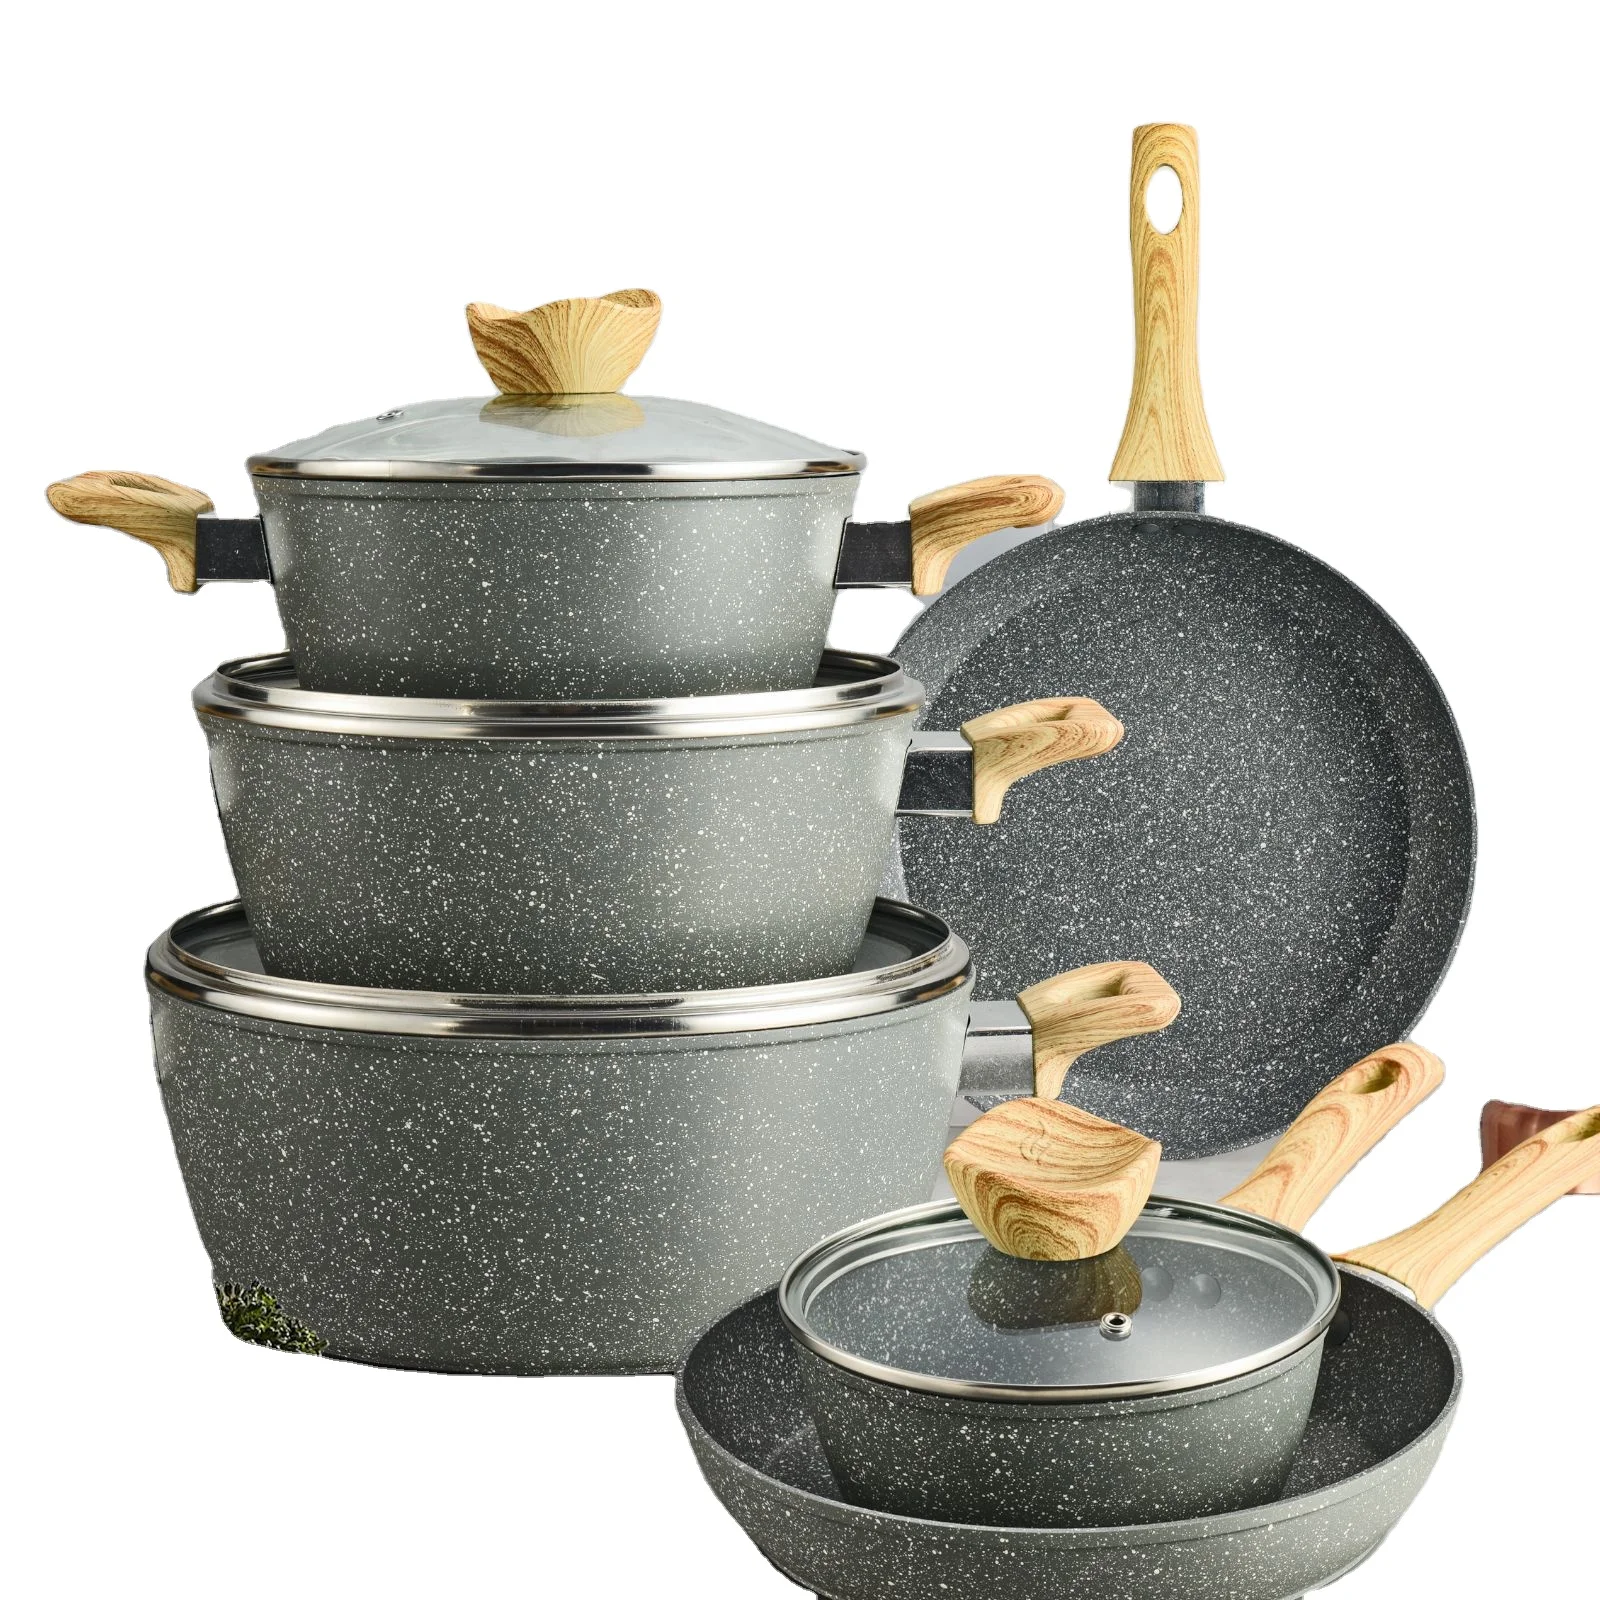 Nonstick Pots and Pans Set; 10 Piece Granite Kitchen Cookware Set